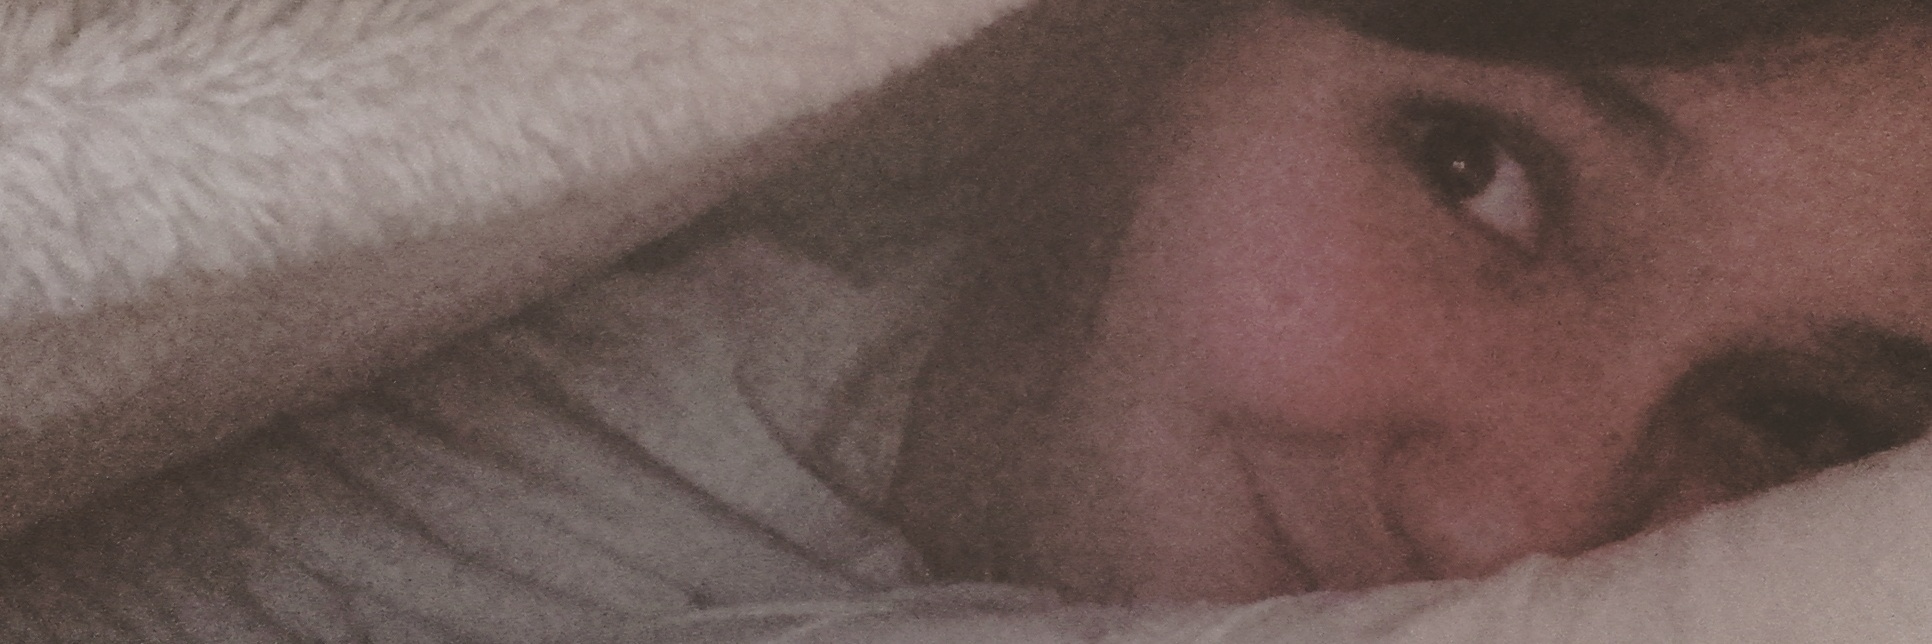 woman in bed under blanket